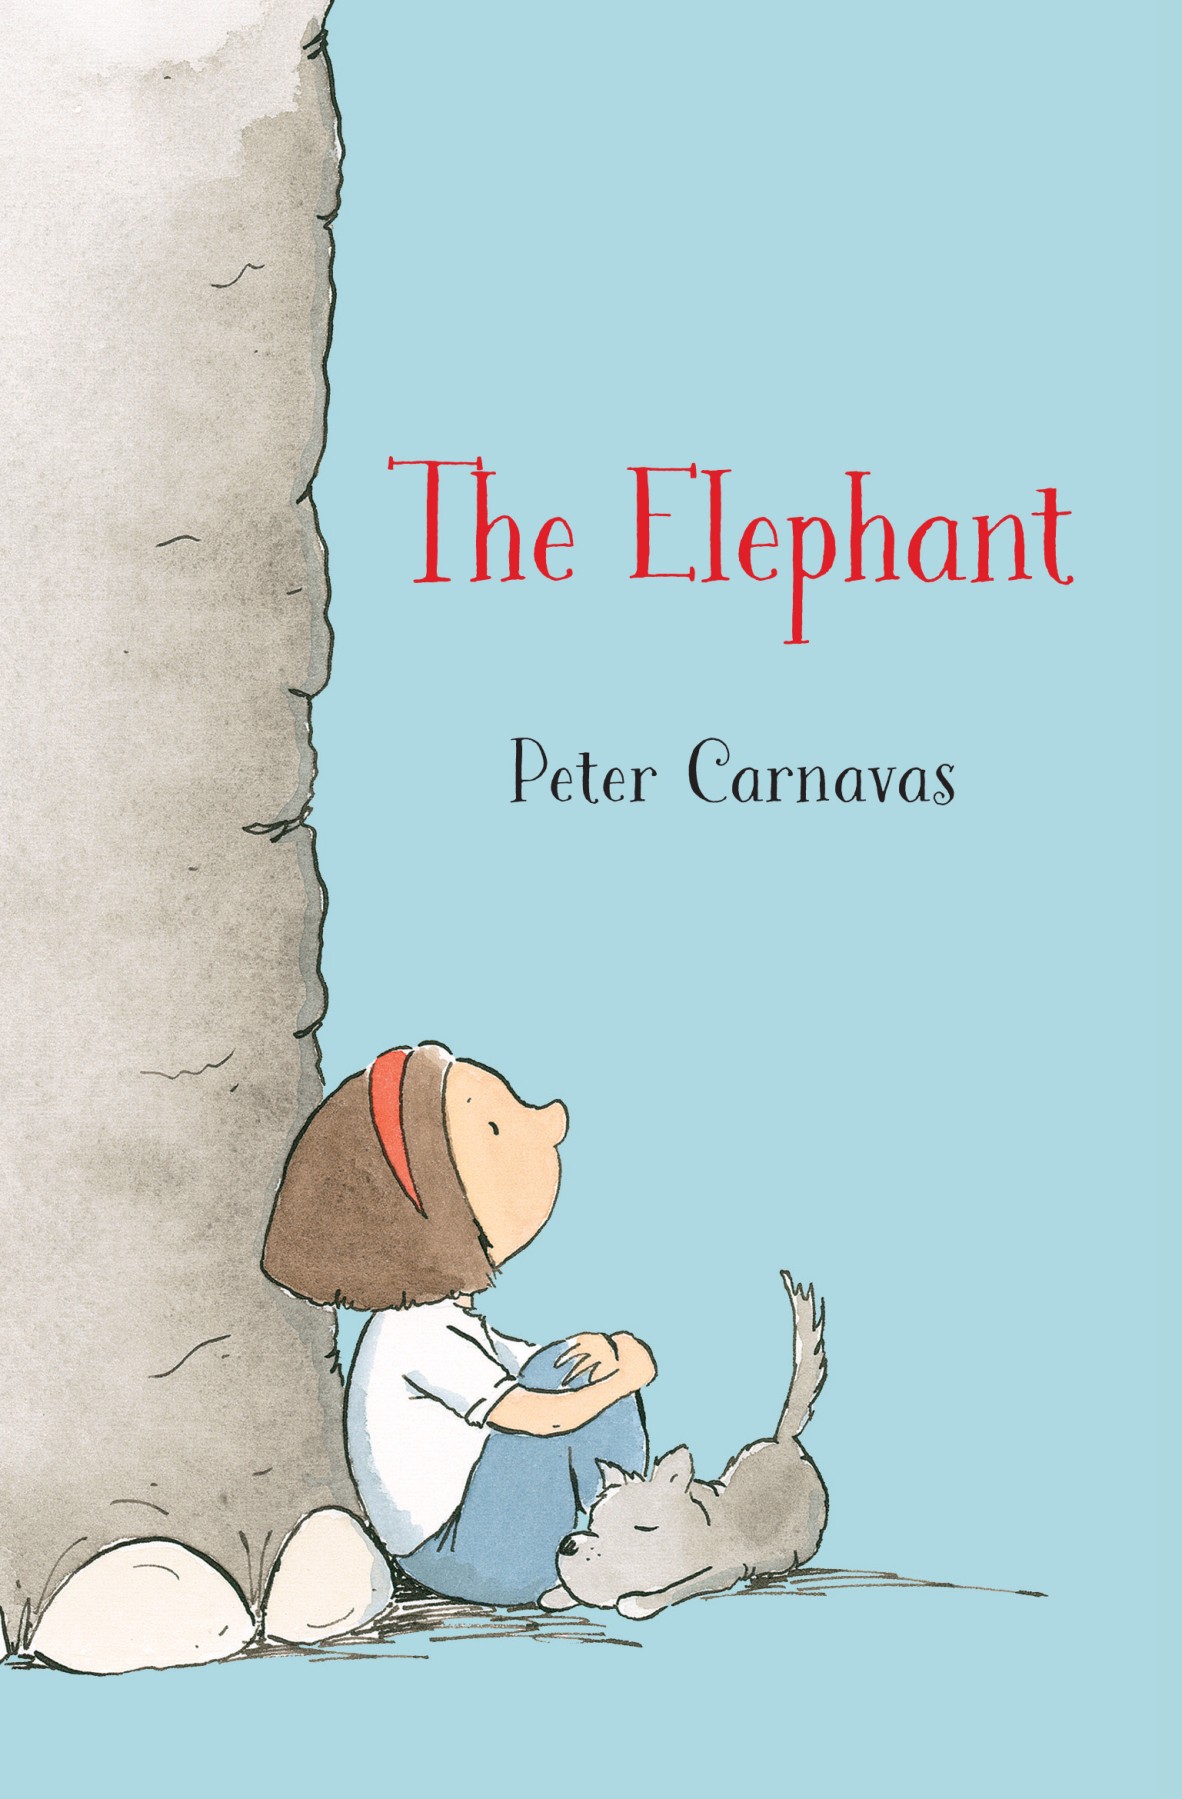 The Elephant by Peter Carnavas